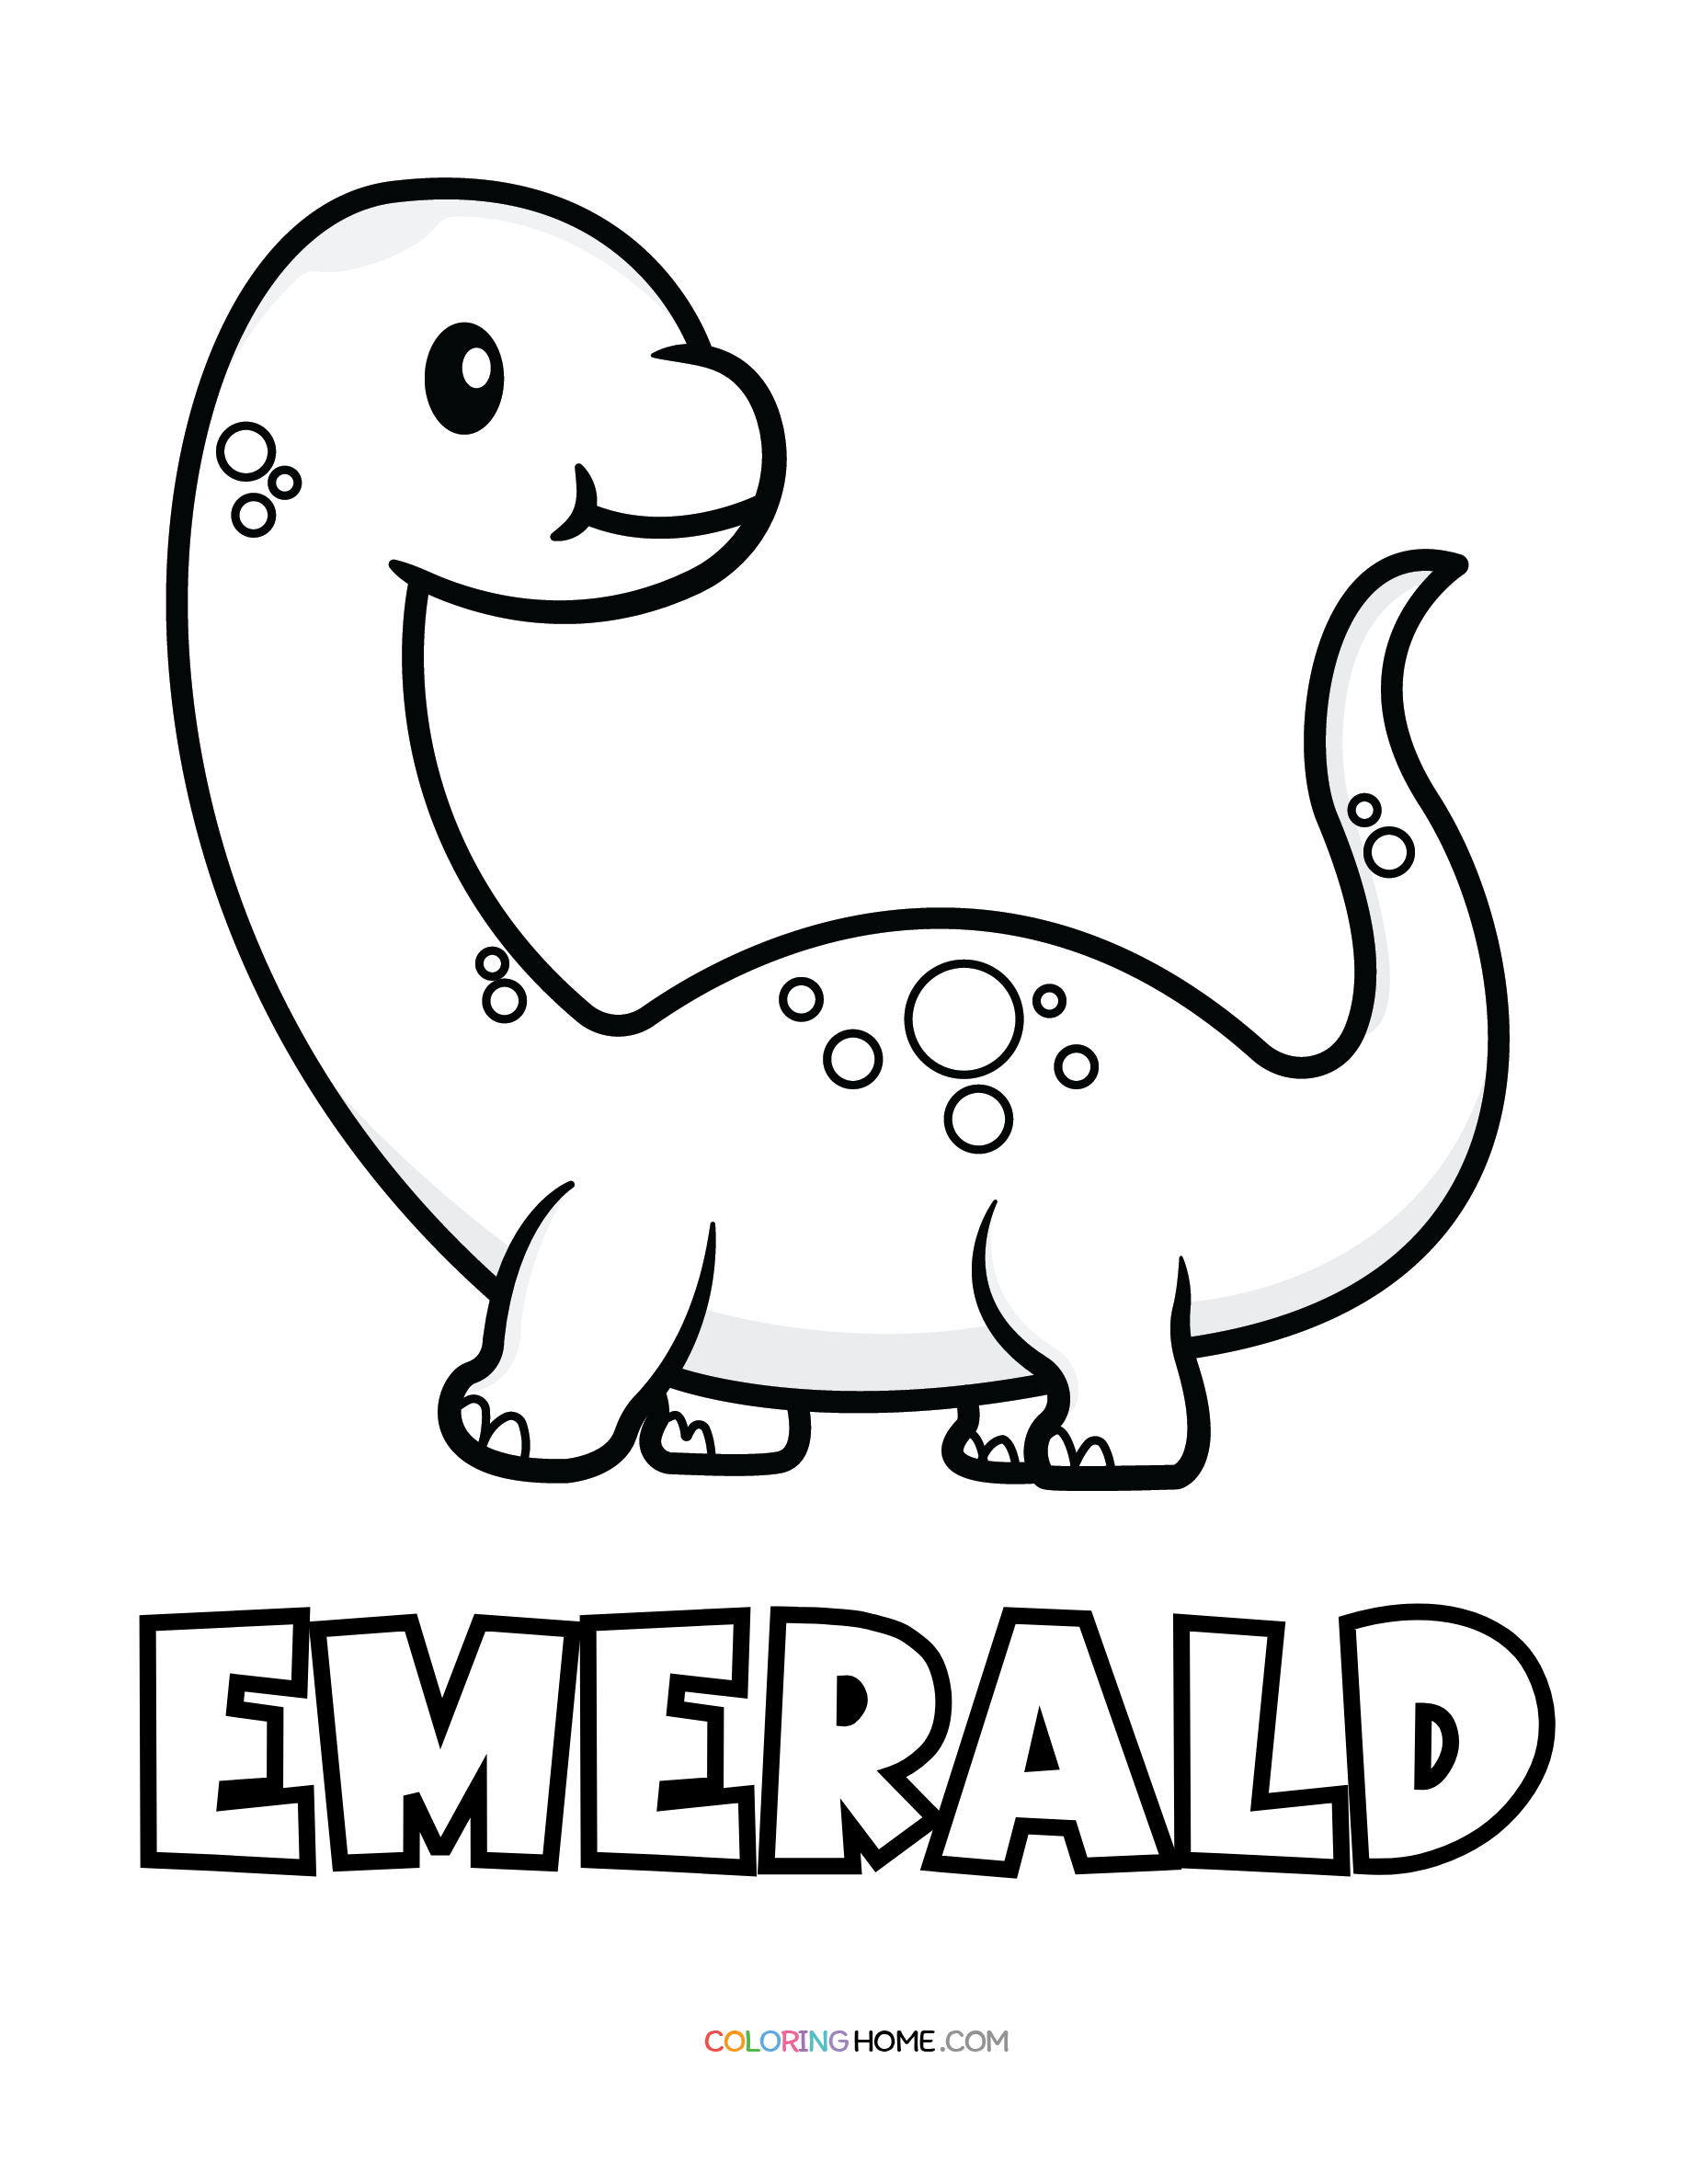 Emerald dinosaur coloring page